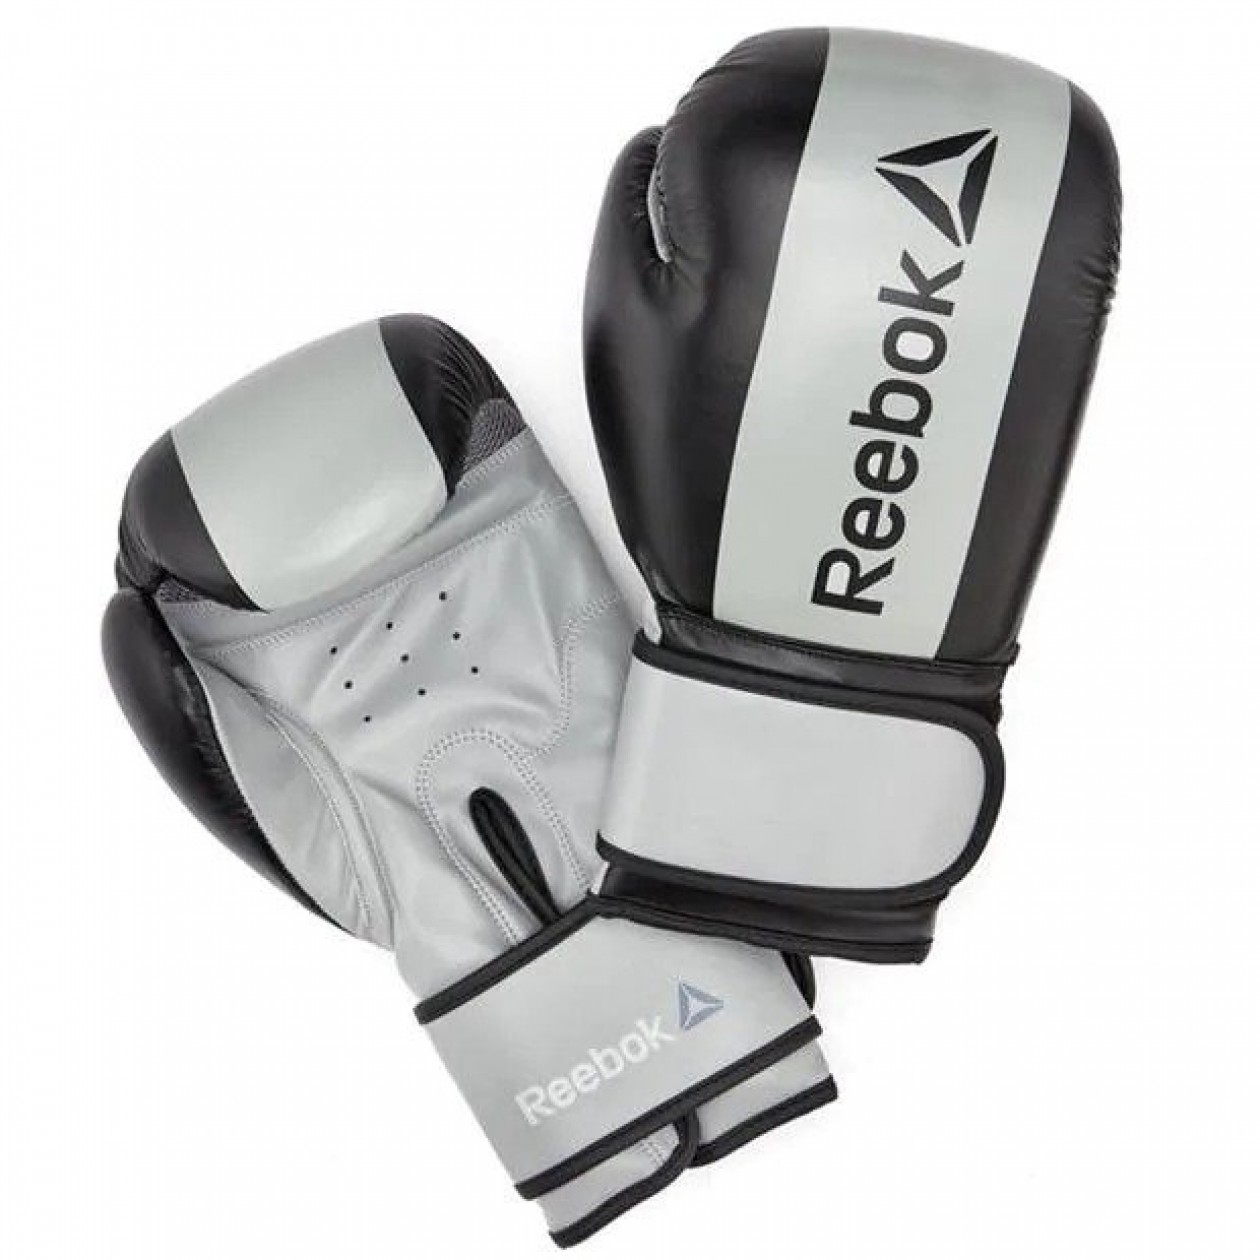 Reebok Retail Boxing Gloves 10OZ